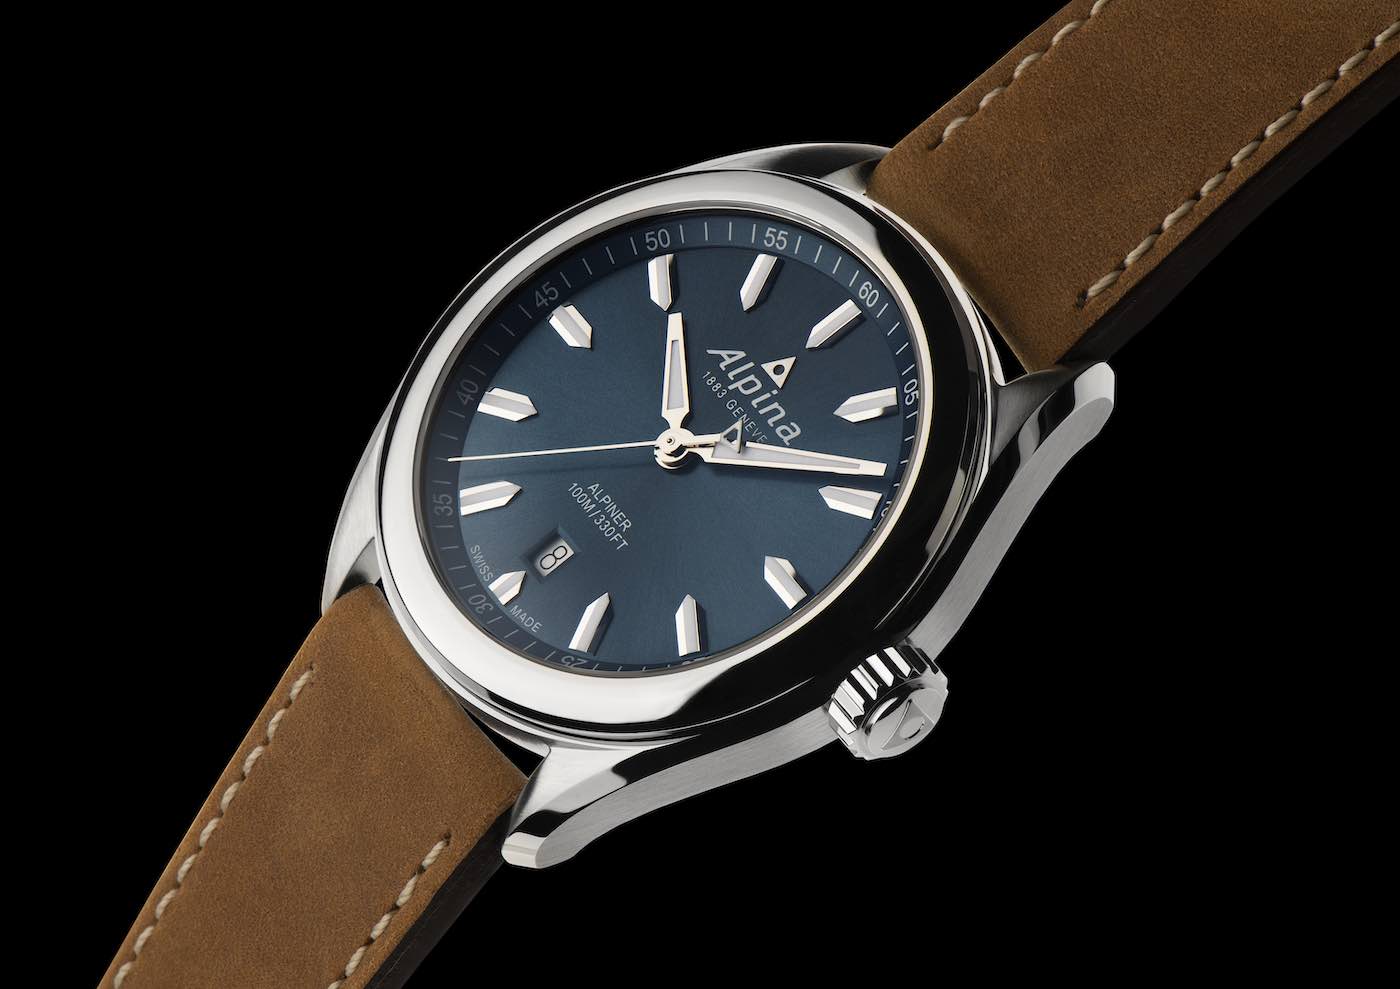 Alpina-Quartz-Watch